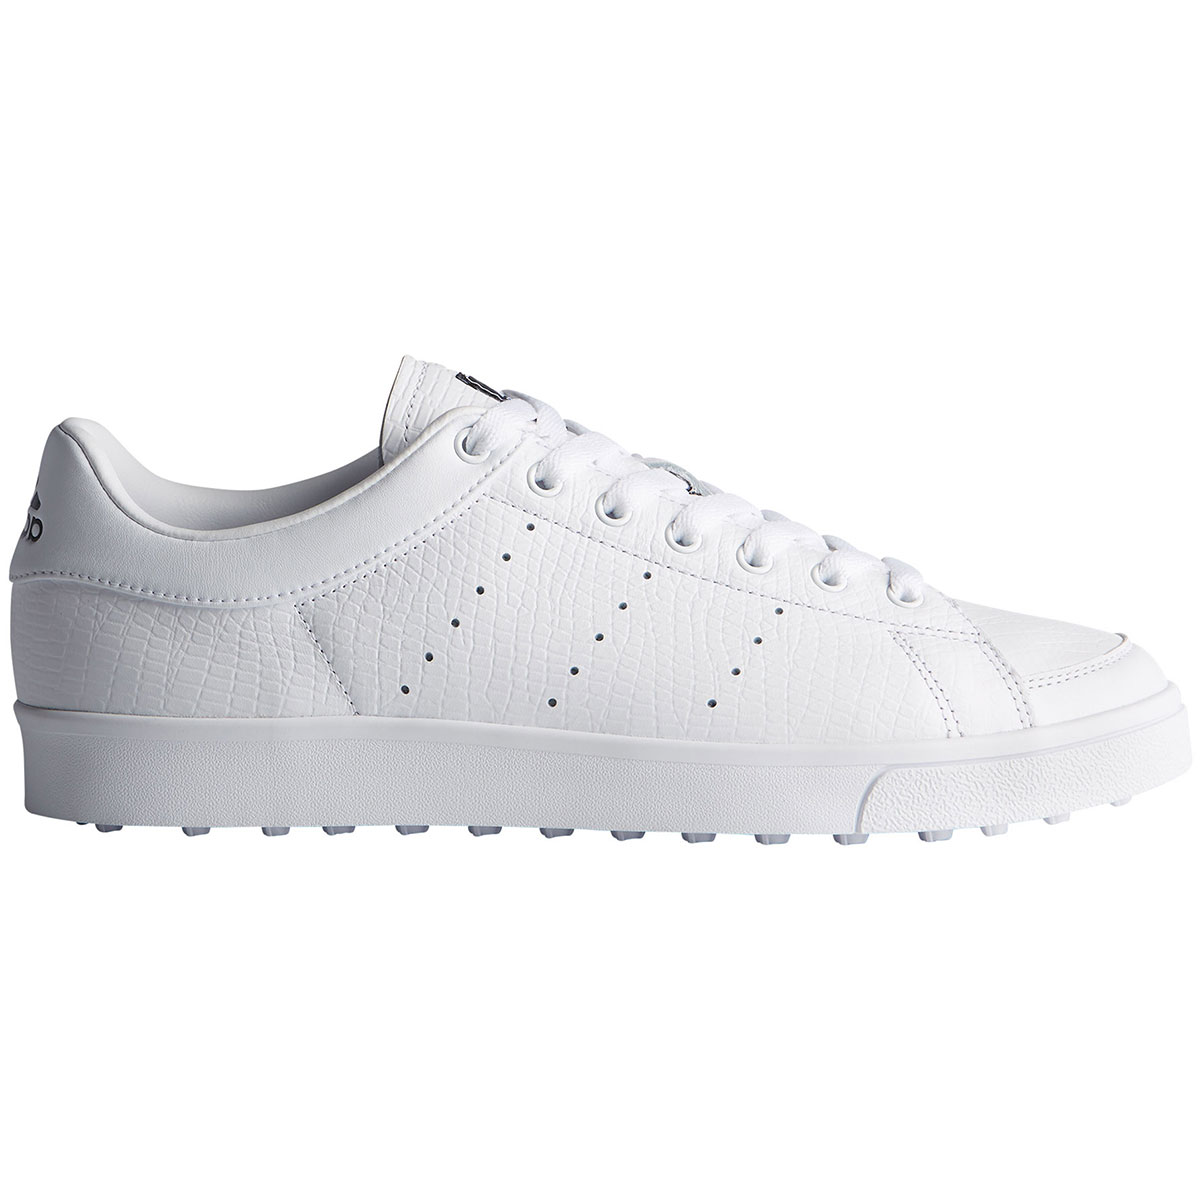 adidas adicross golf shoes white